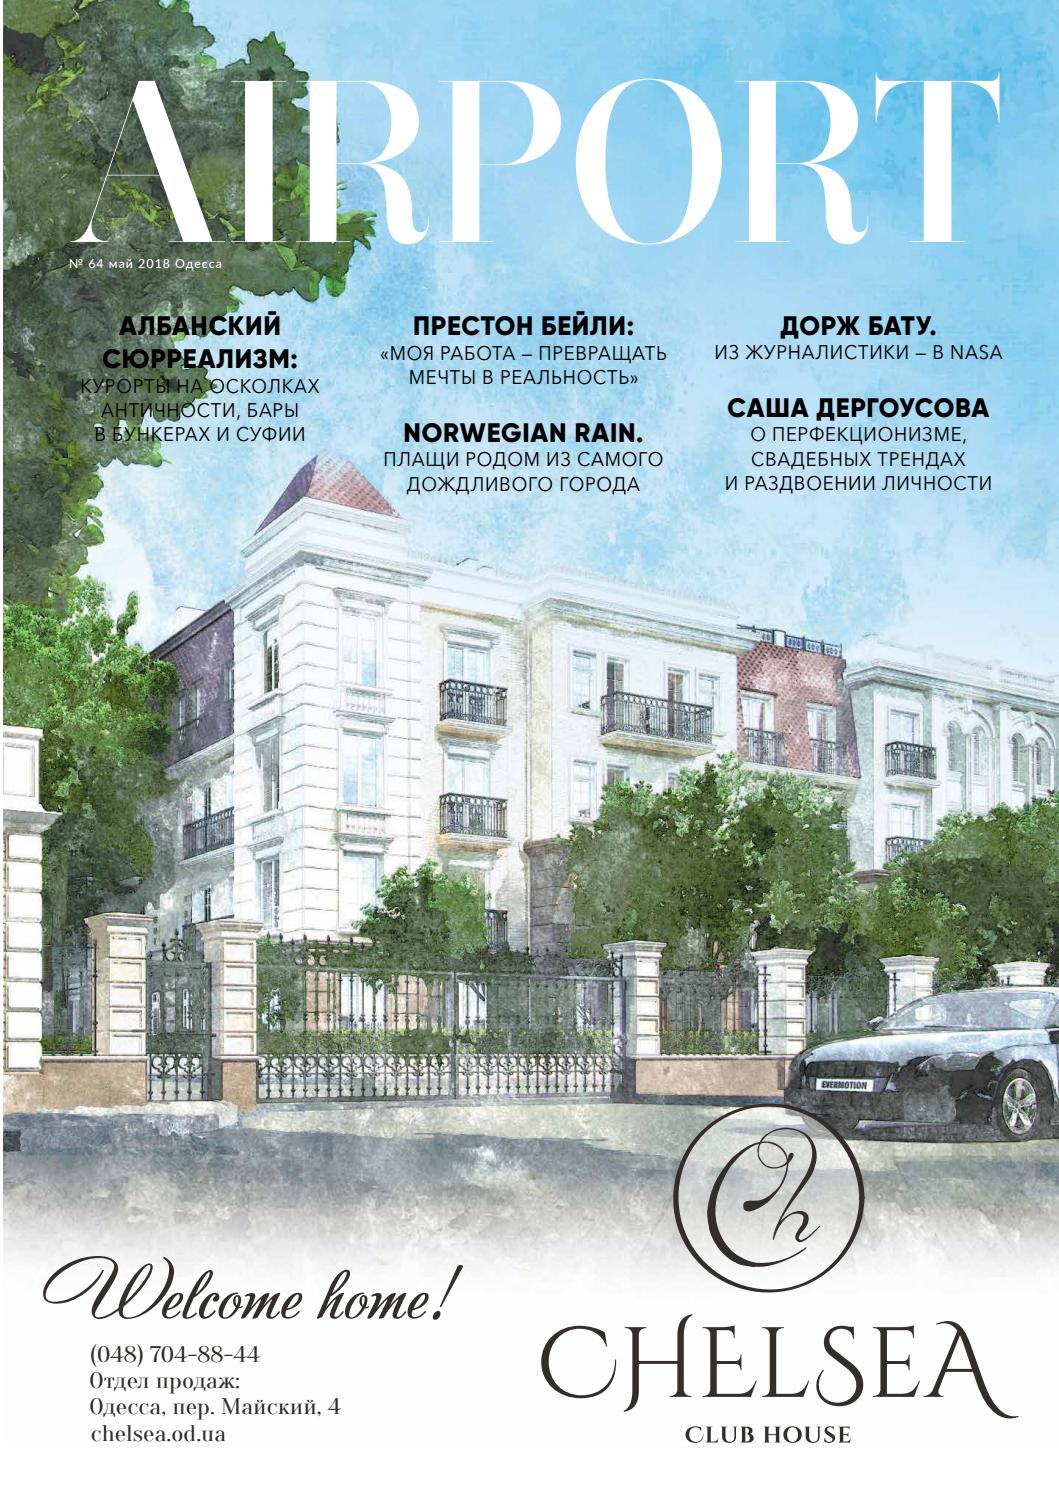 Salon De Jardin Noir Frais May 18 by Airport Magazine Odessa issuu